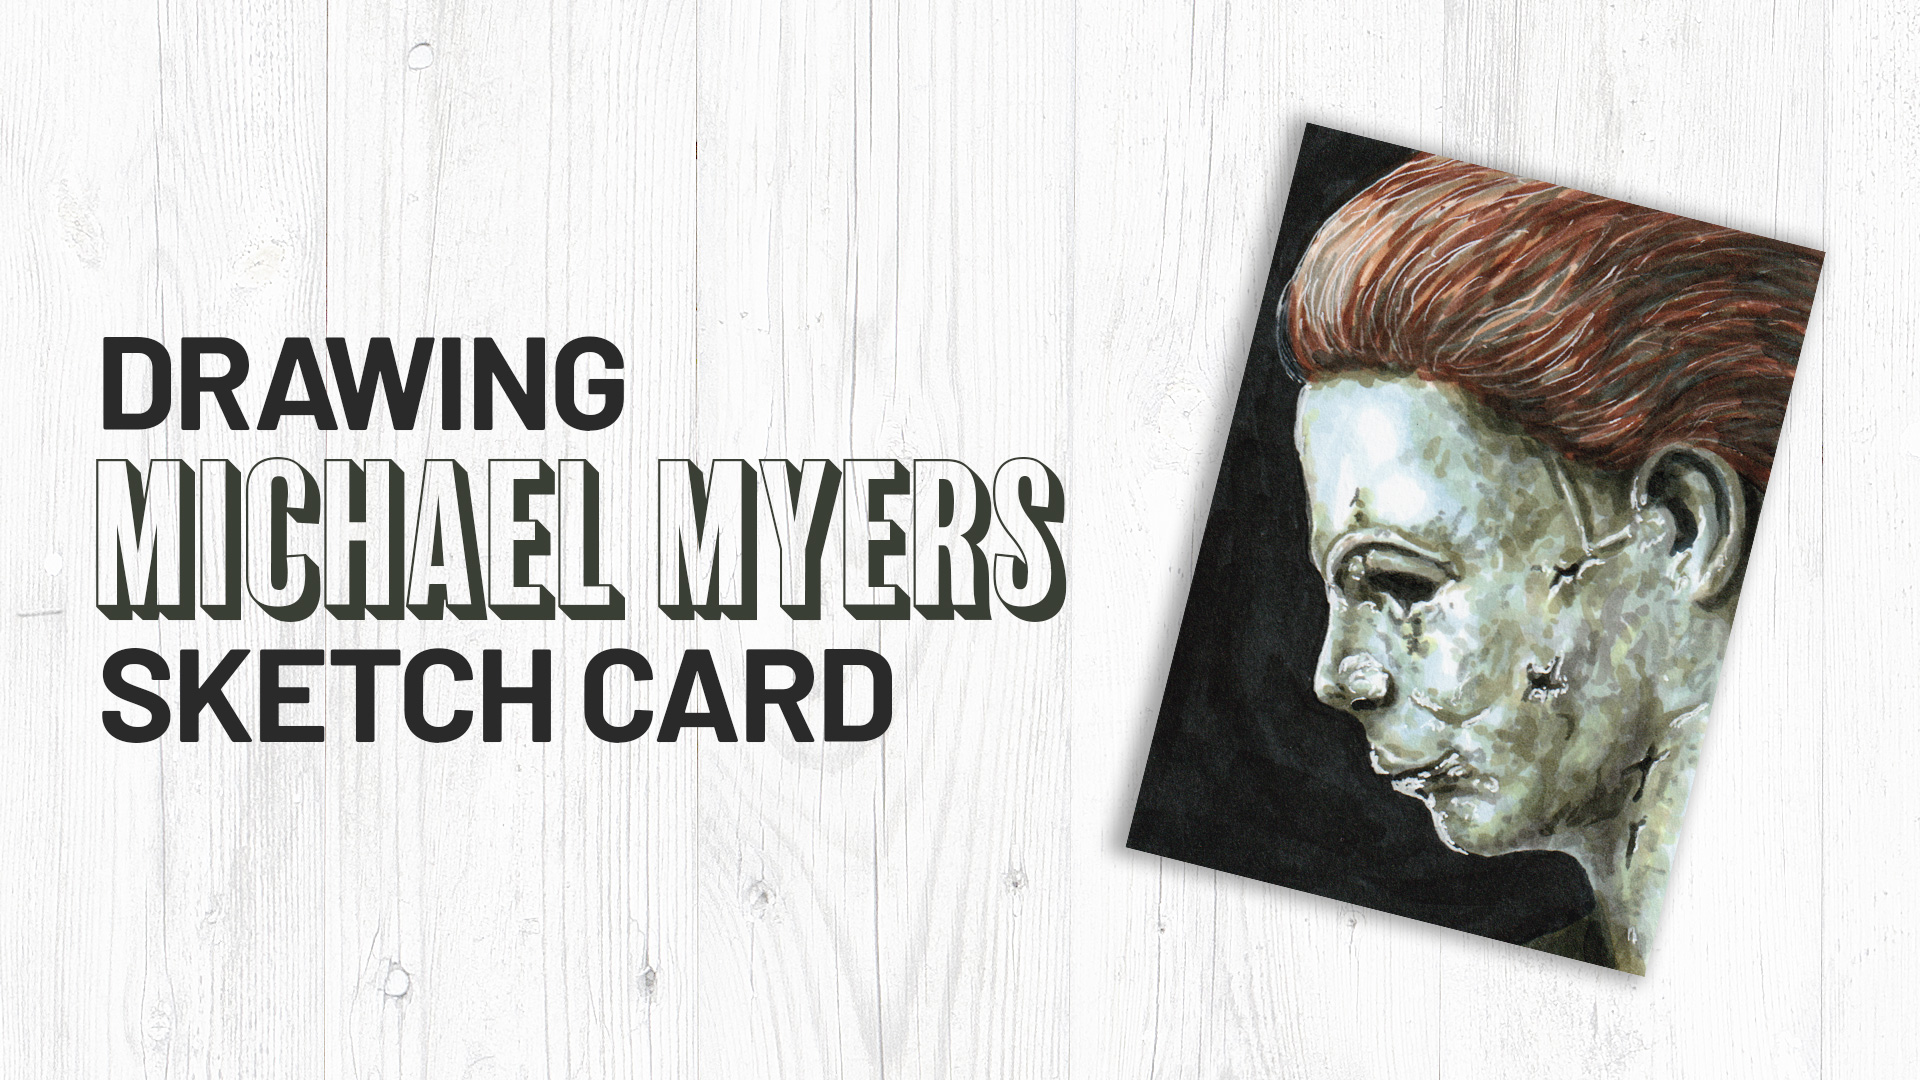 Michael Myers Sketch Card by Duke